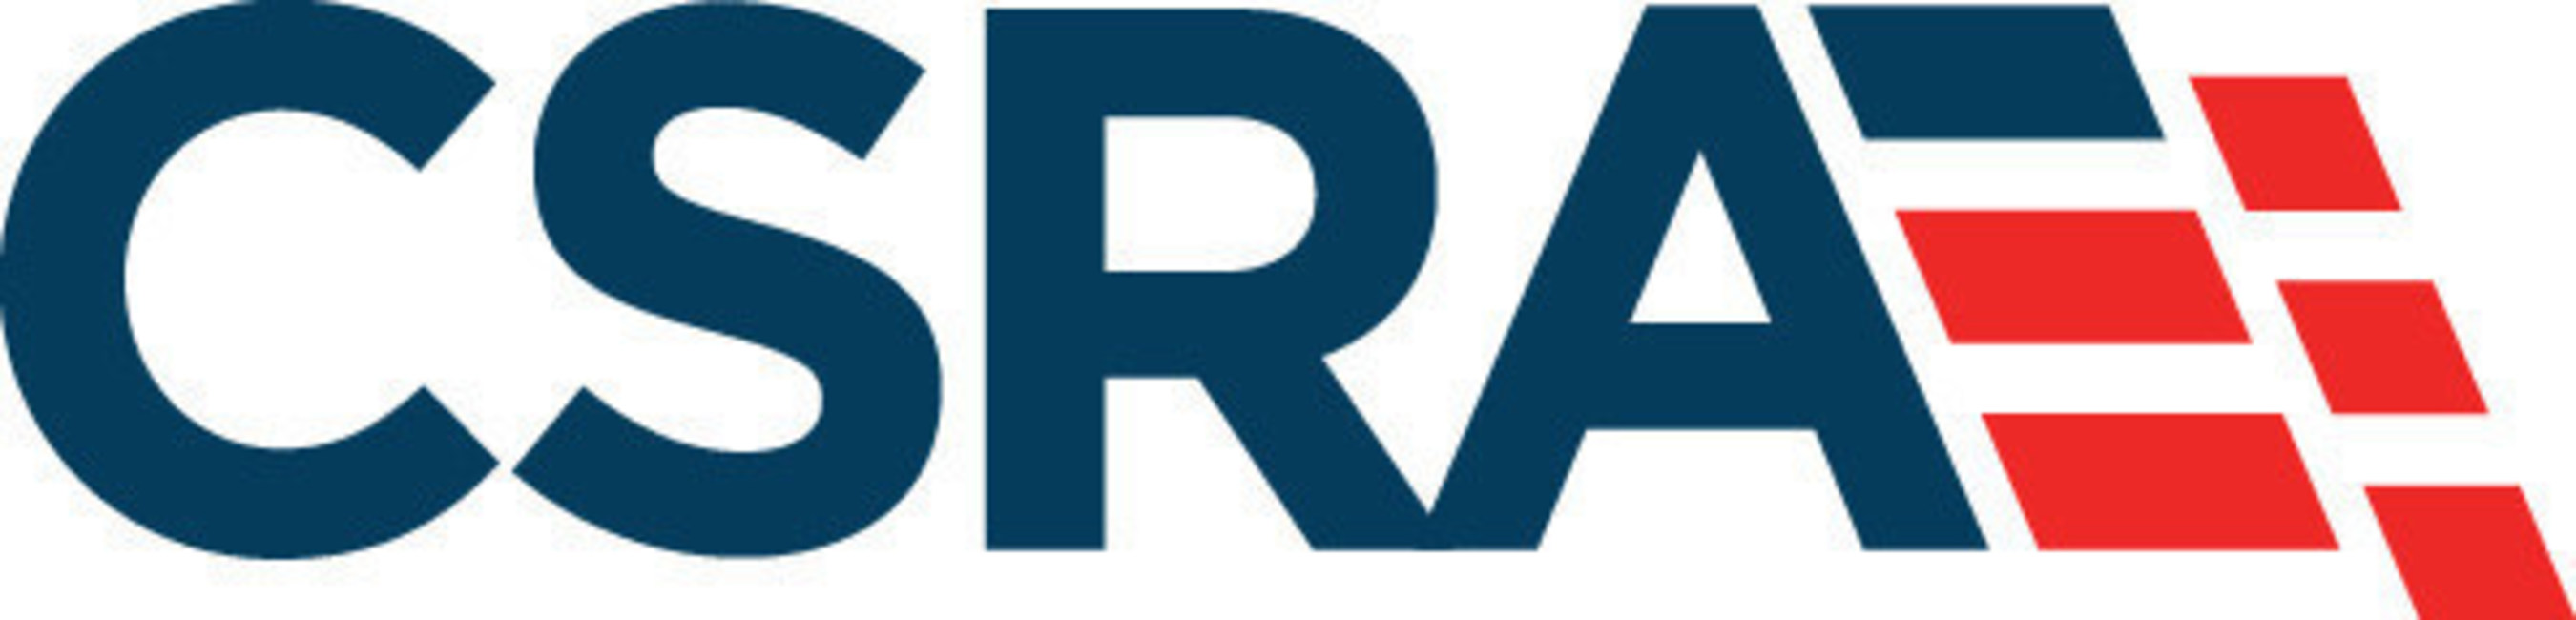 CSRA Inc. Logo (PRNewsFoto/CSRA Inc.)